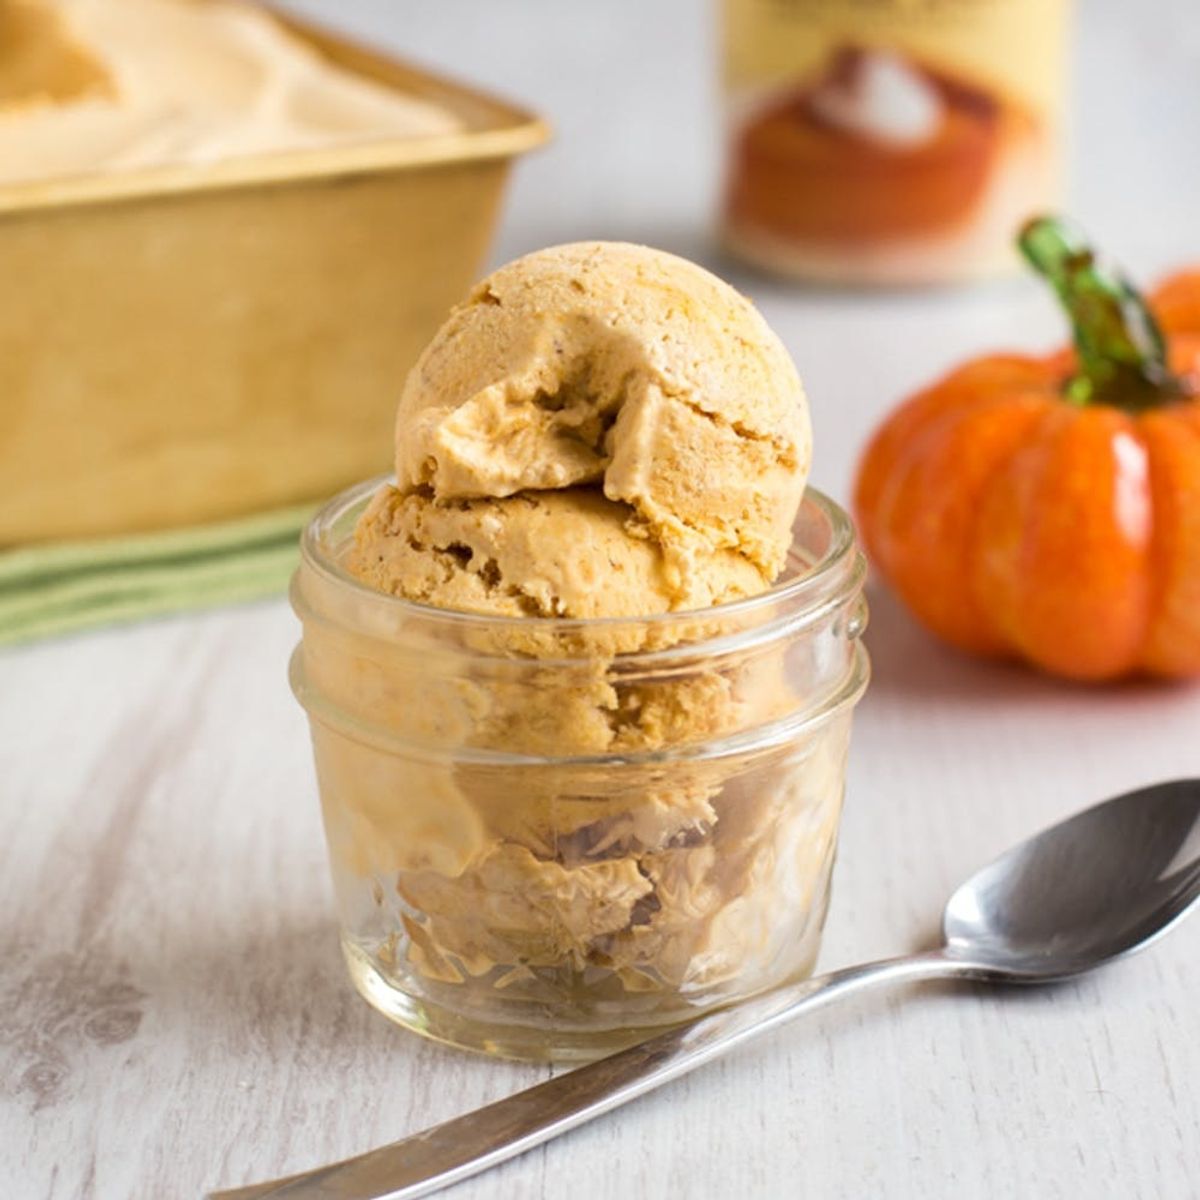 Pumpkin Pie Ice Cream Will Be Your New Favorite Way to Use Pumpkin!